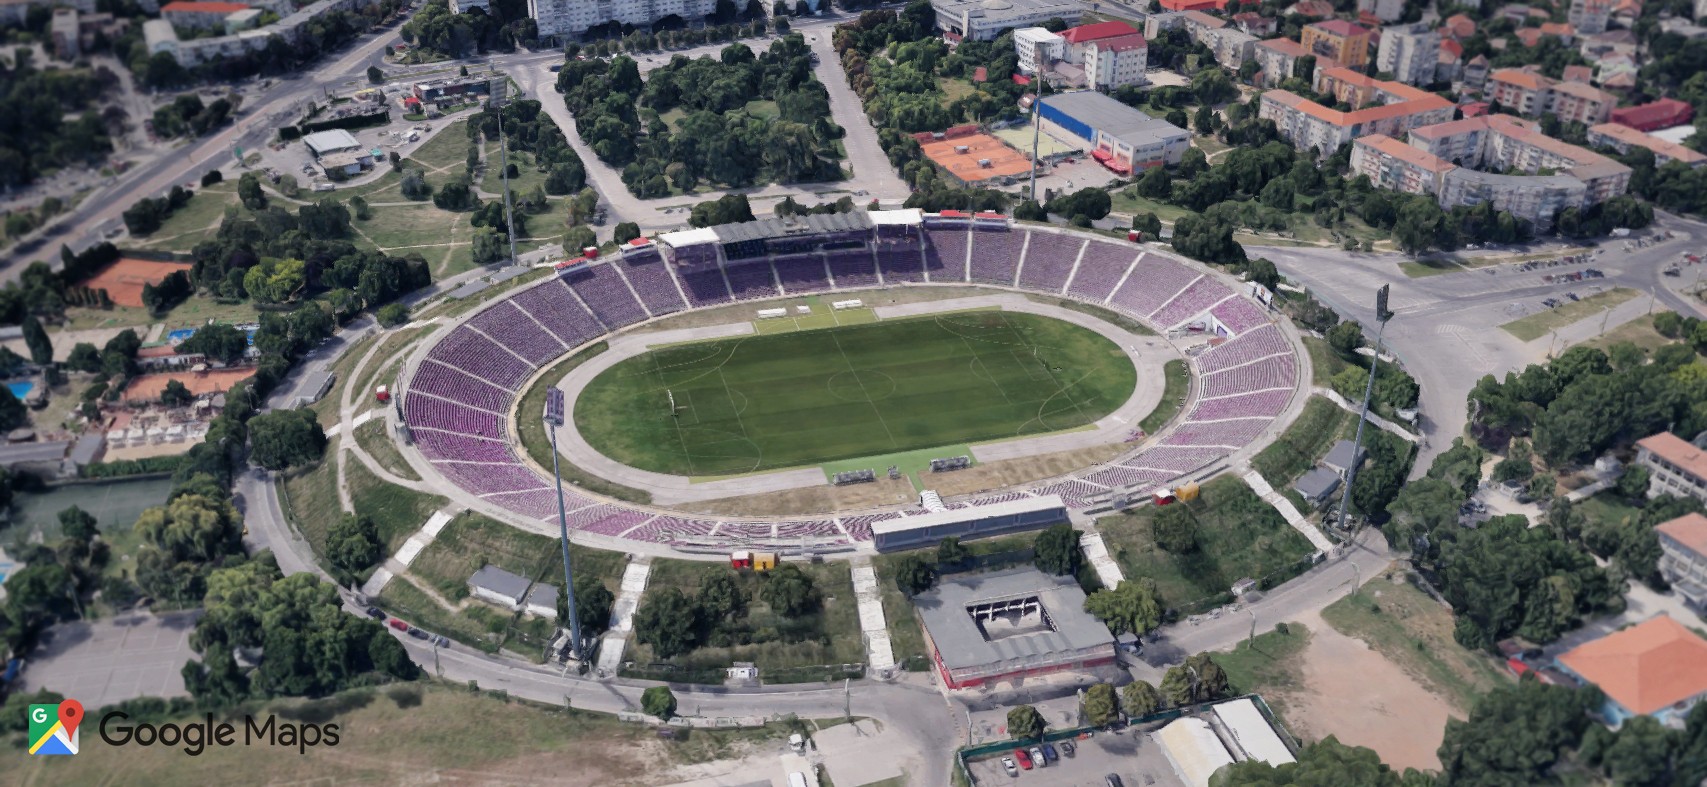 Stadionul Dan Paltinisanu, Timisoara